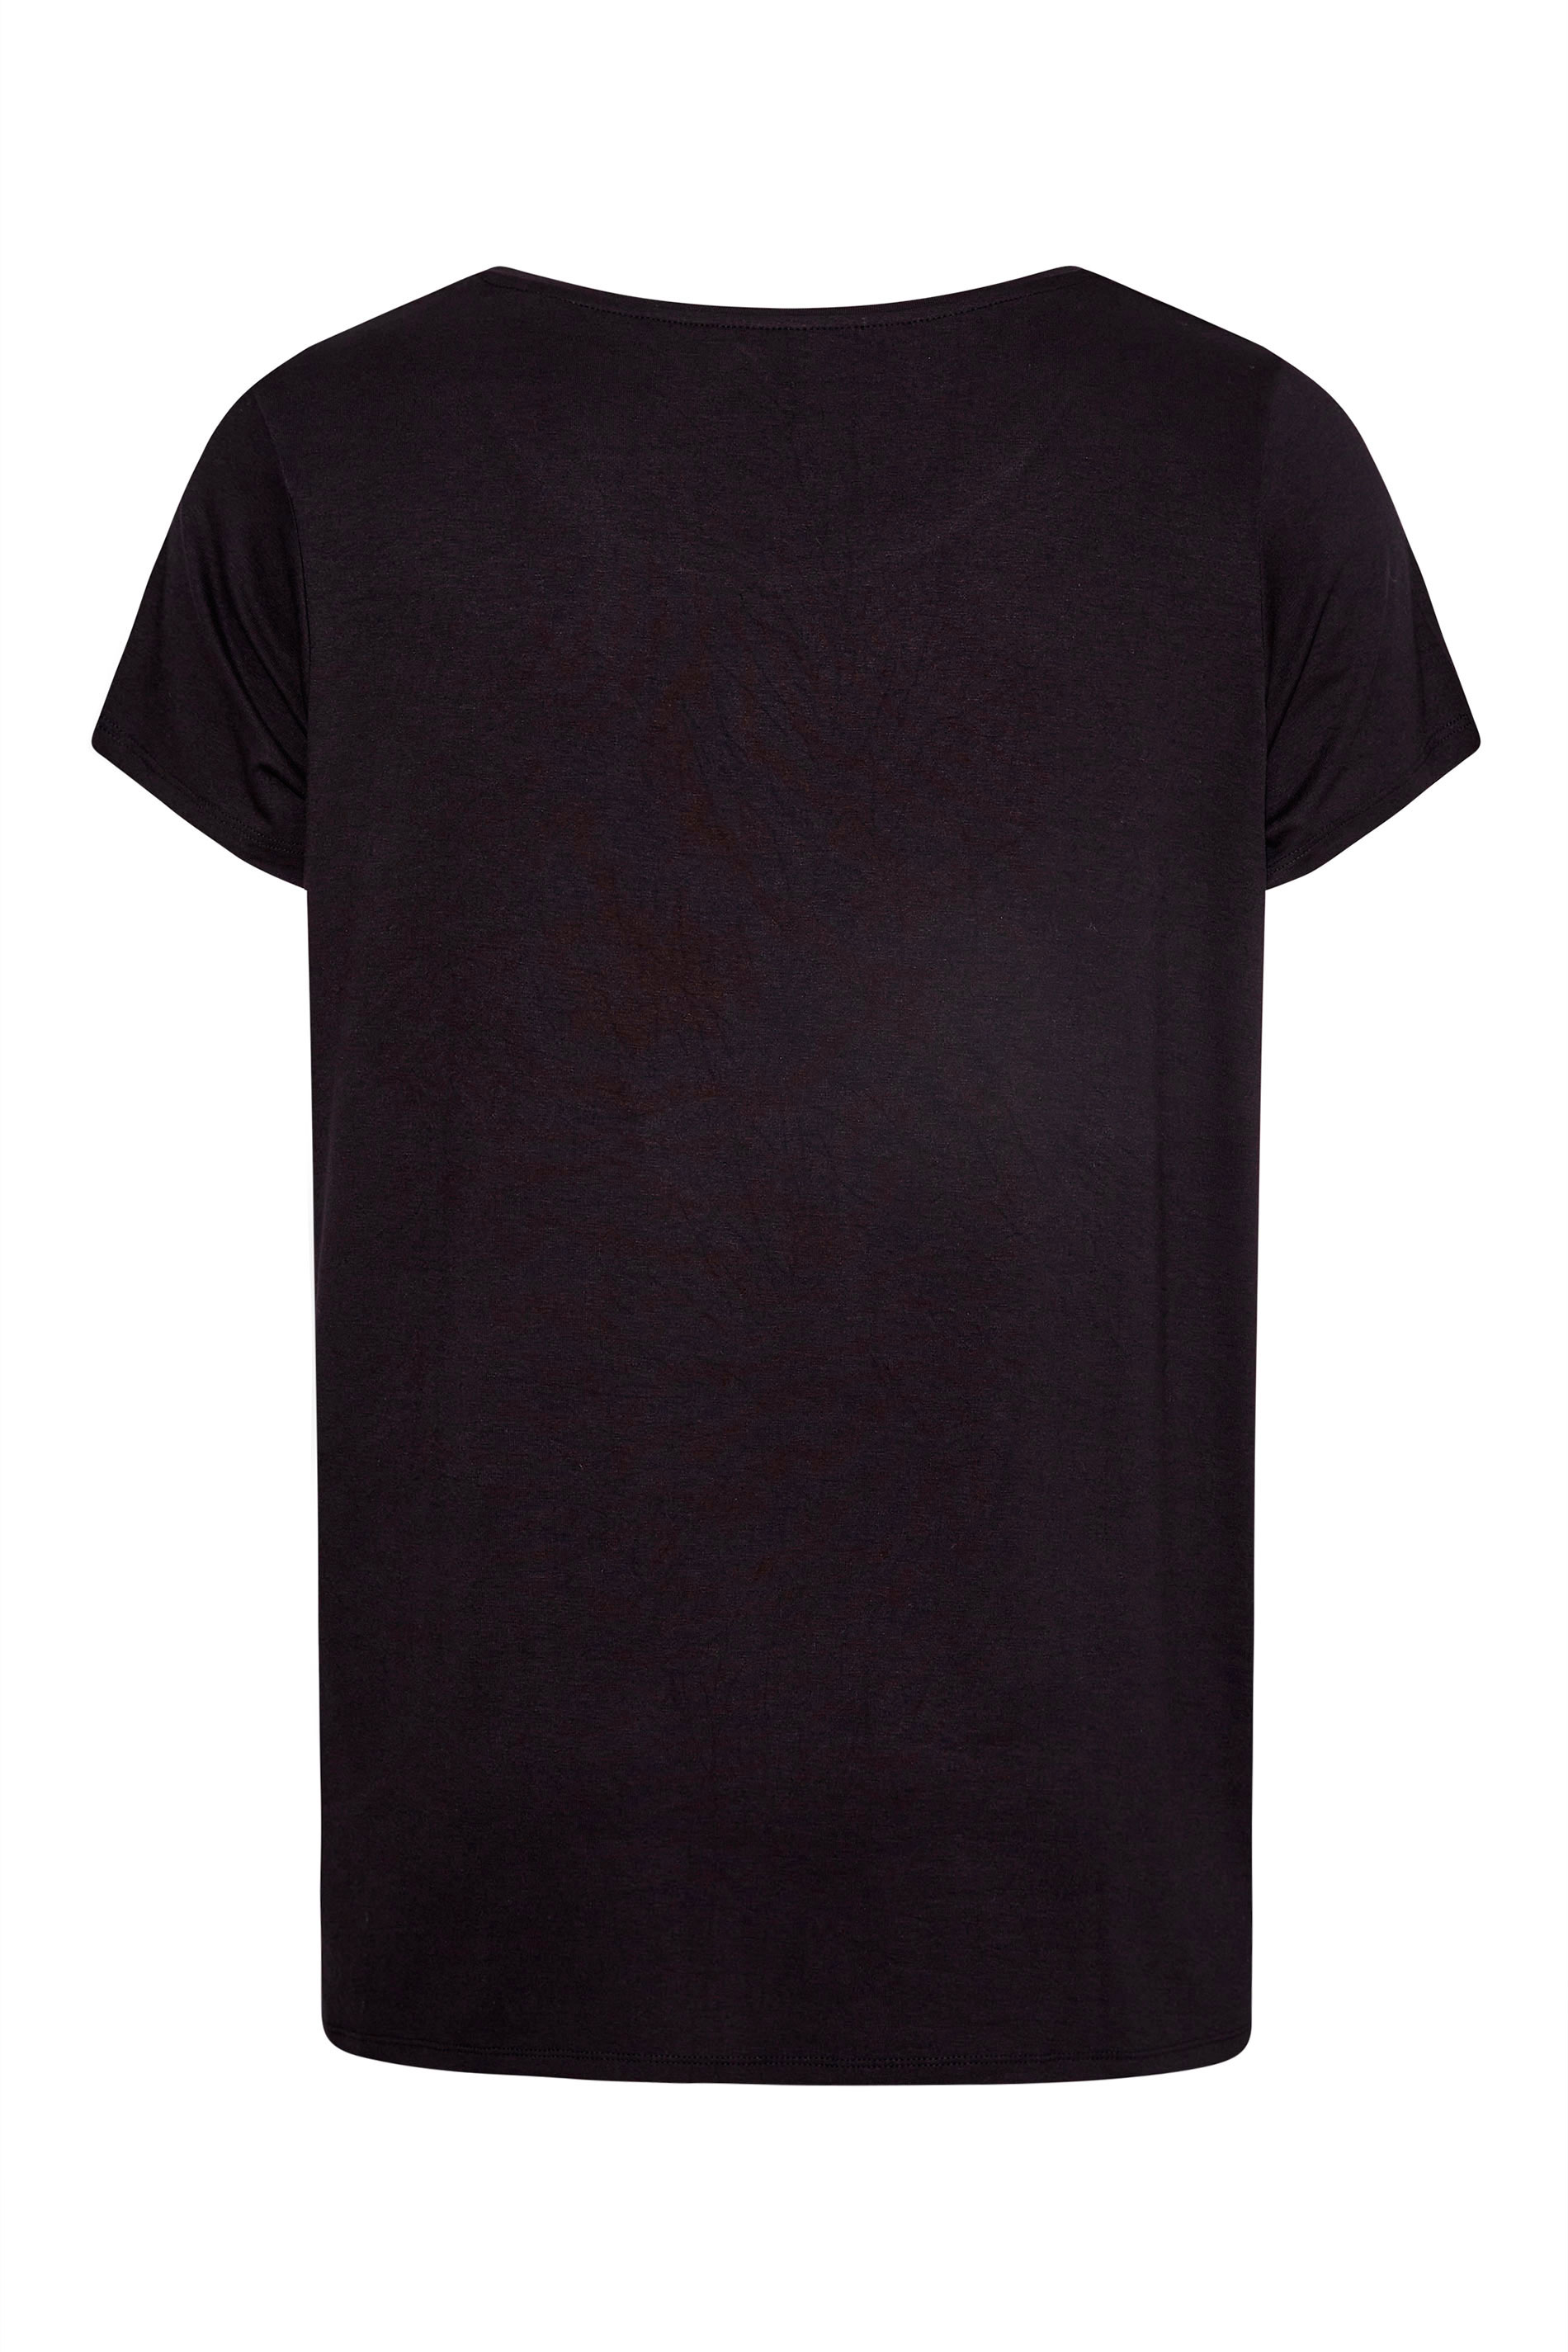 Grande taille  Tops Grande taille  T-Shirts | T-Shirt Noir en Jersey Slogan'Make Good Stories' - EB47578